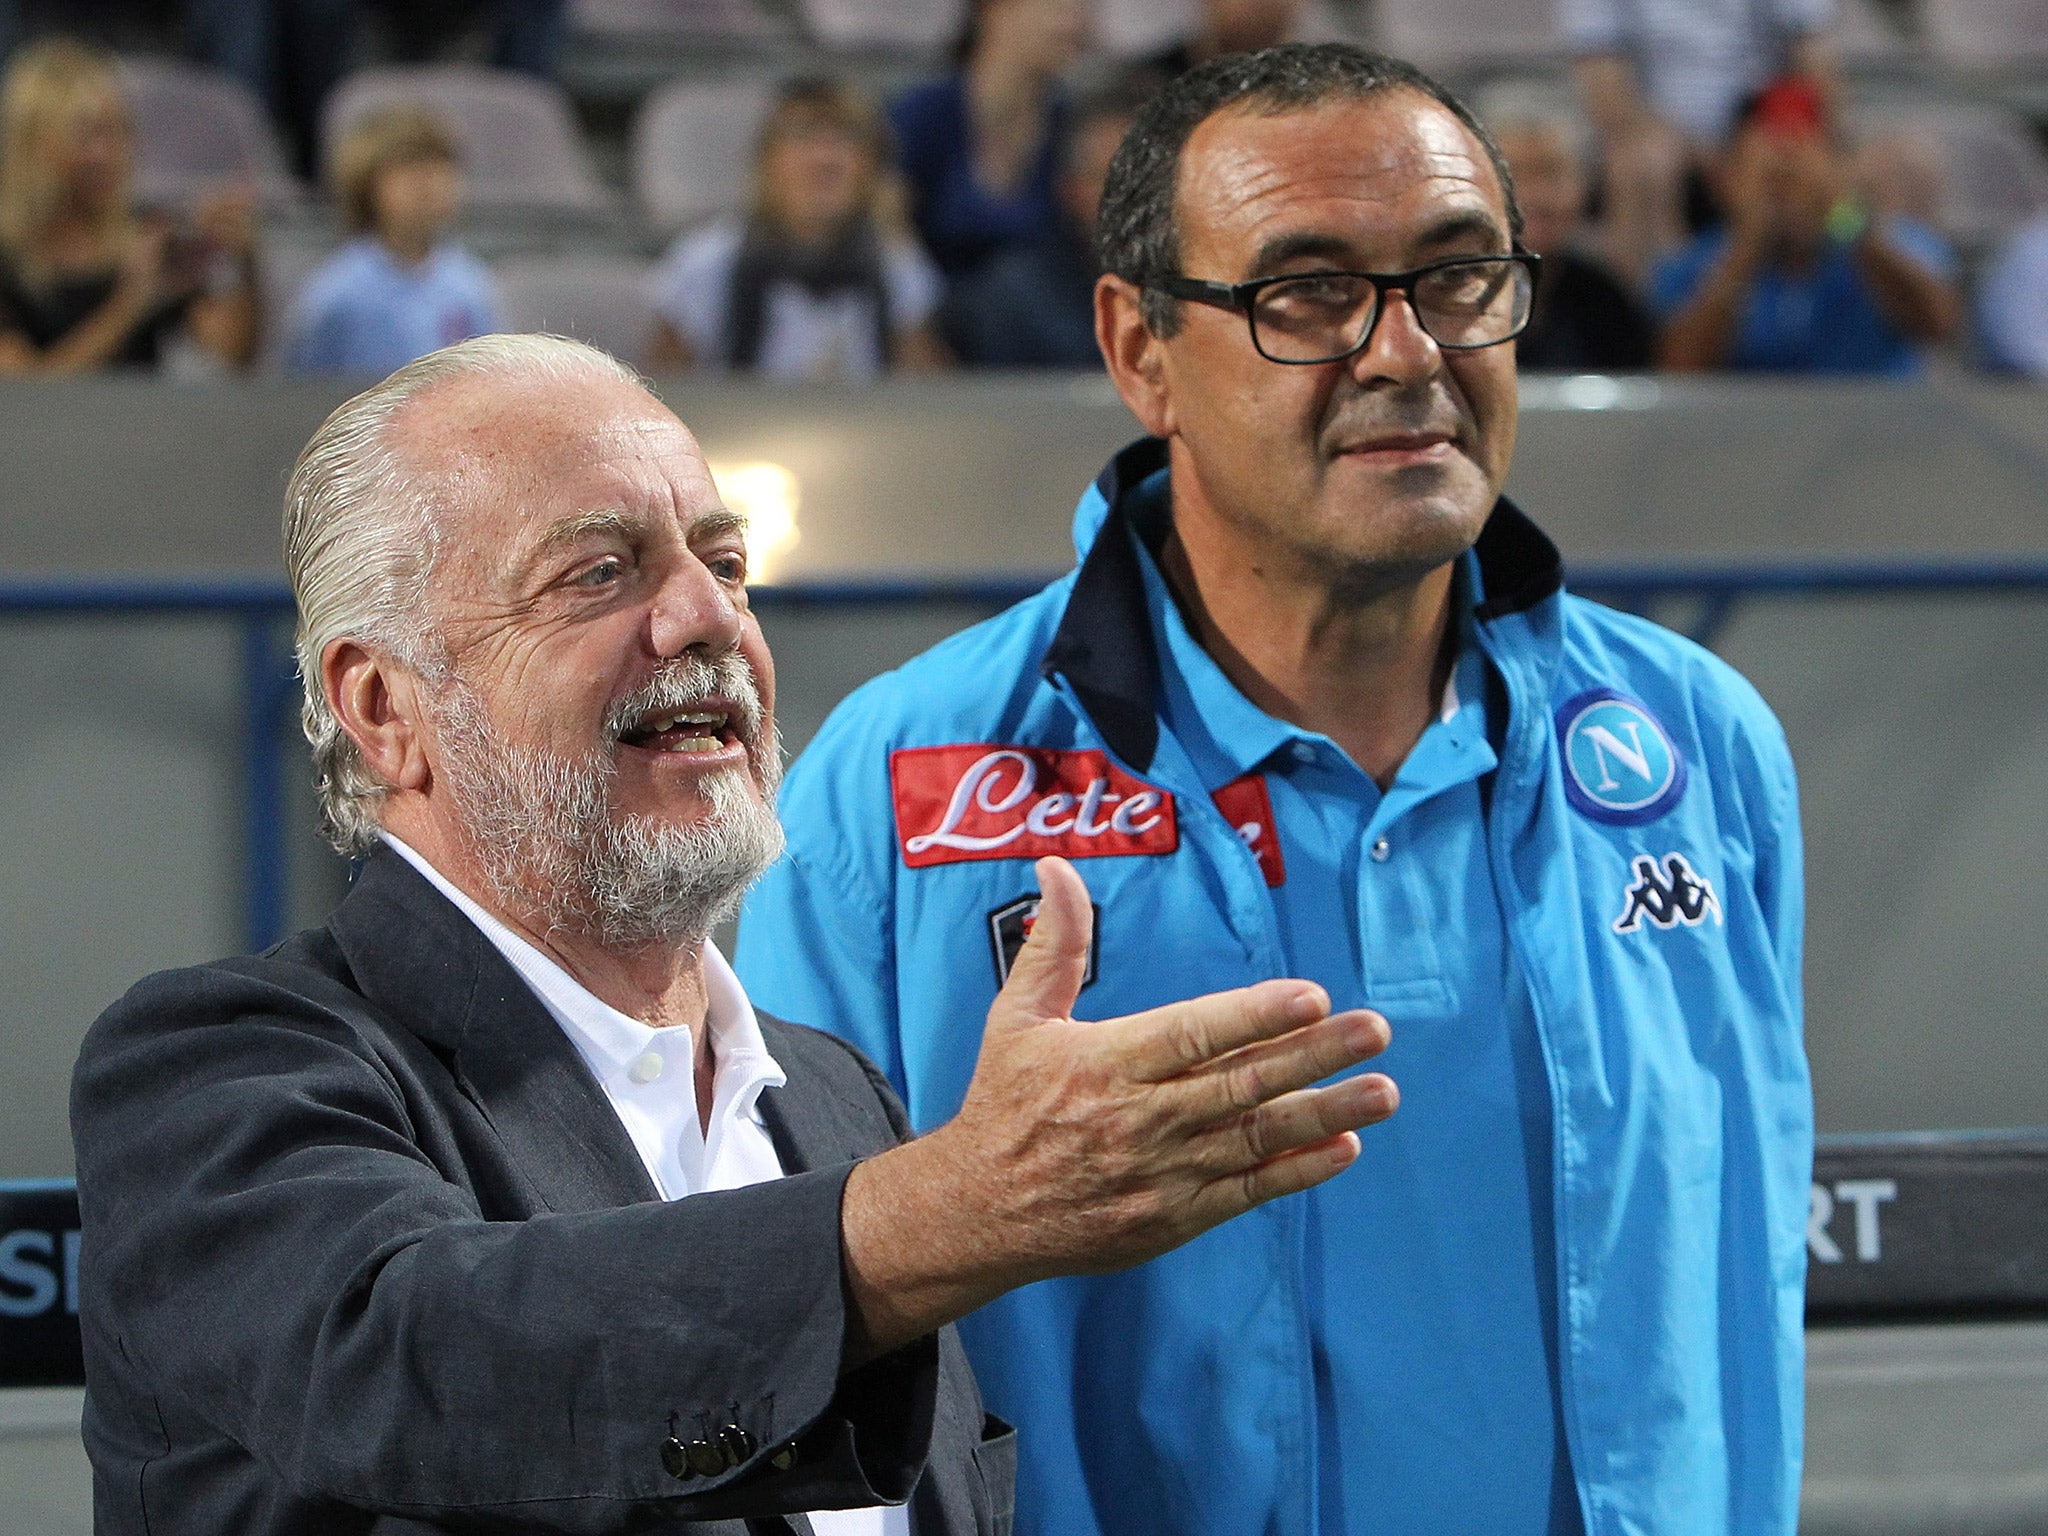 Napoli president Aurelio de Laurentiis has confirmed the club have no interest in selling Gonzalo Higuain